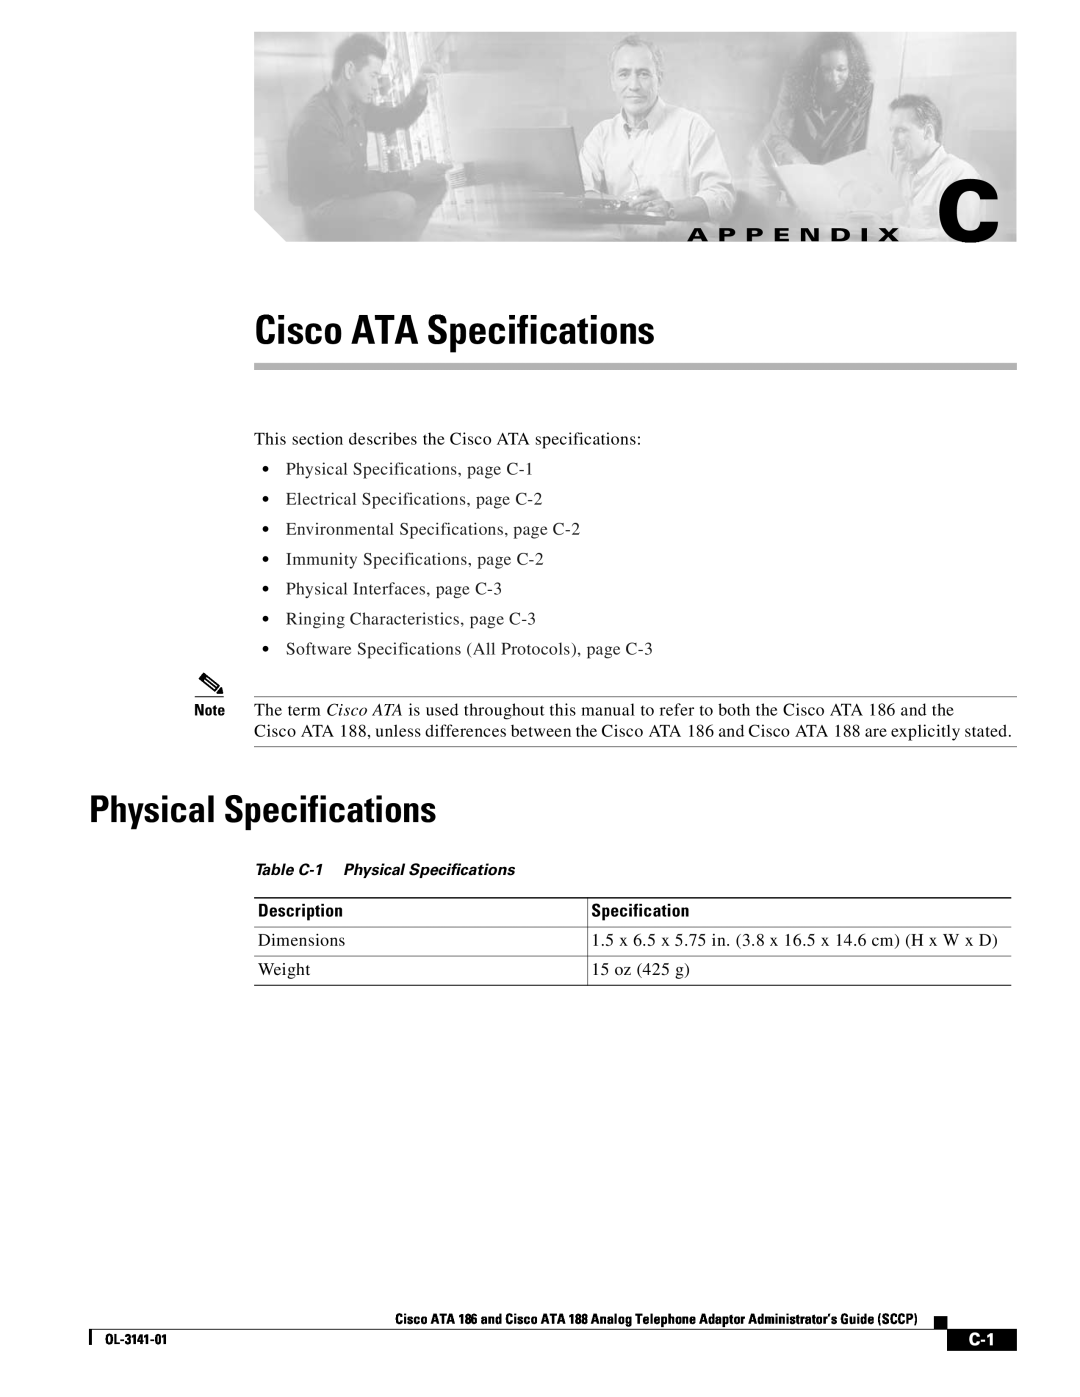 Cisco Systems ATA 188, ATA 186 manual Cisco ATA Specifications, Physical Specifications, A P P E N D I X C, Description 